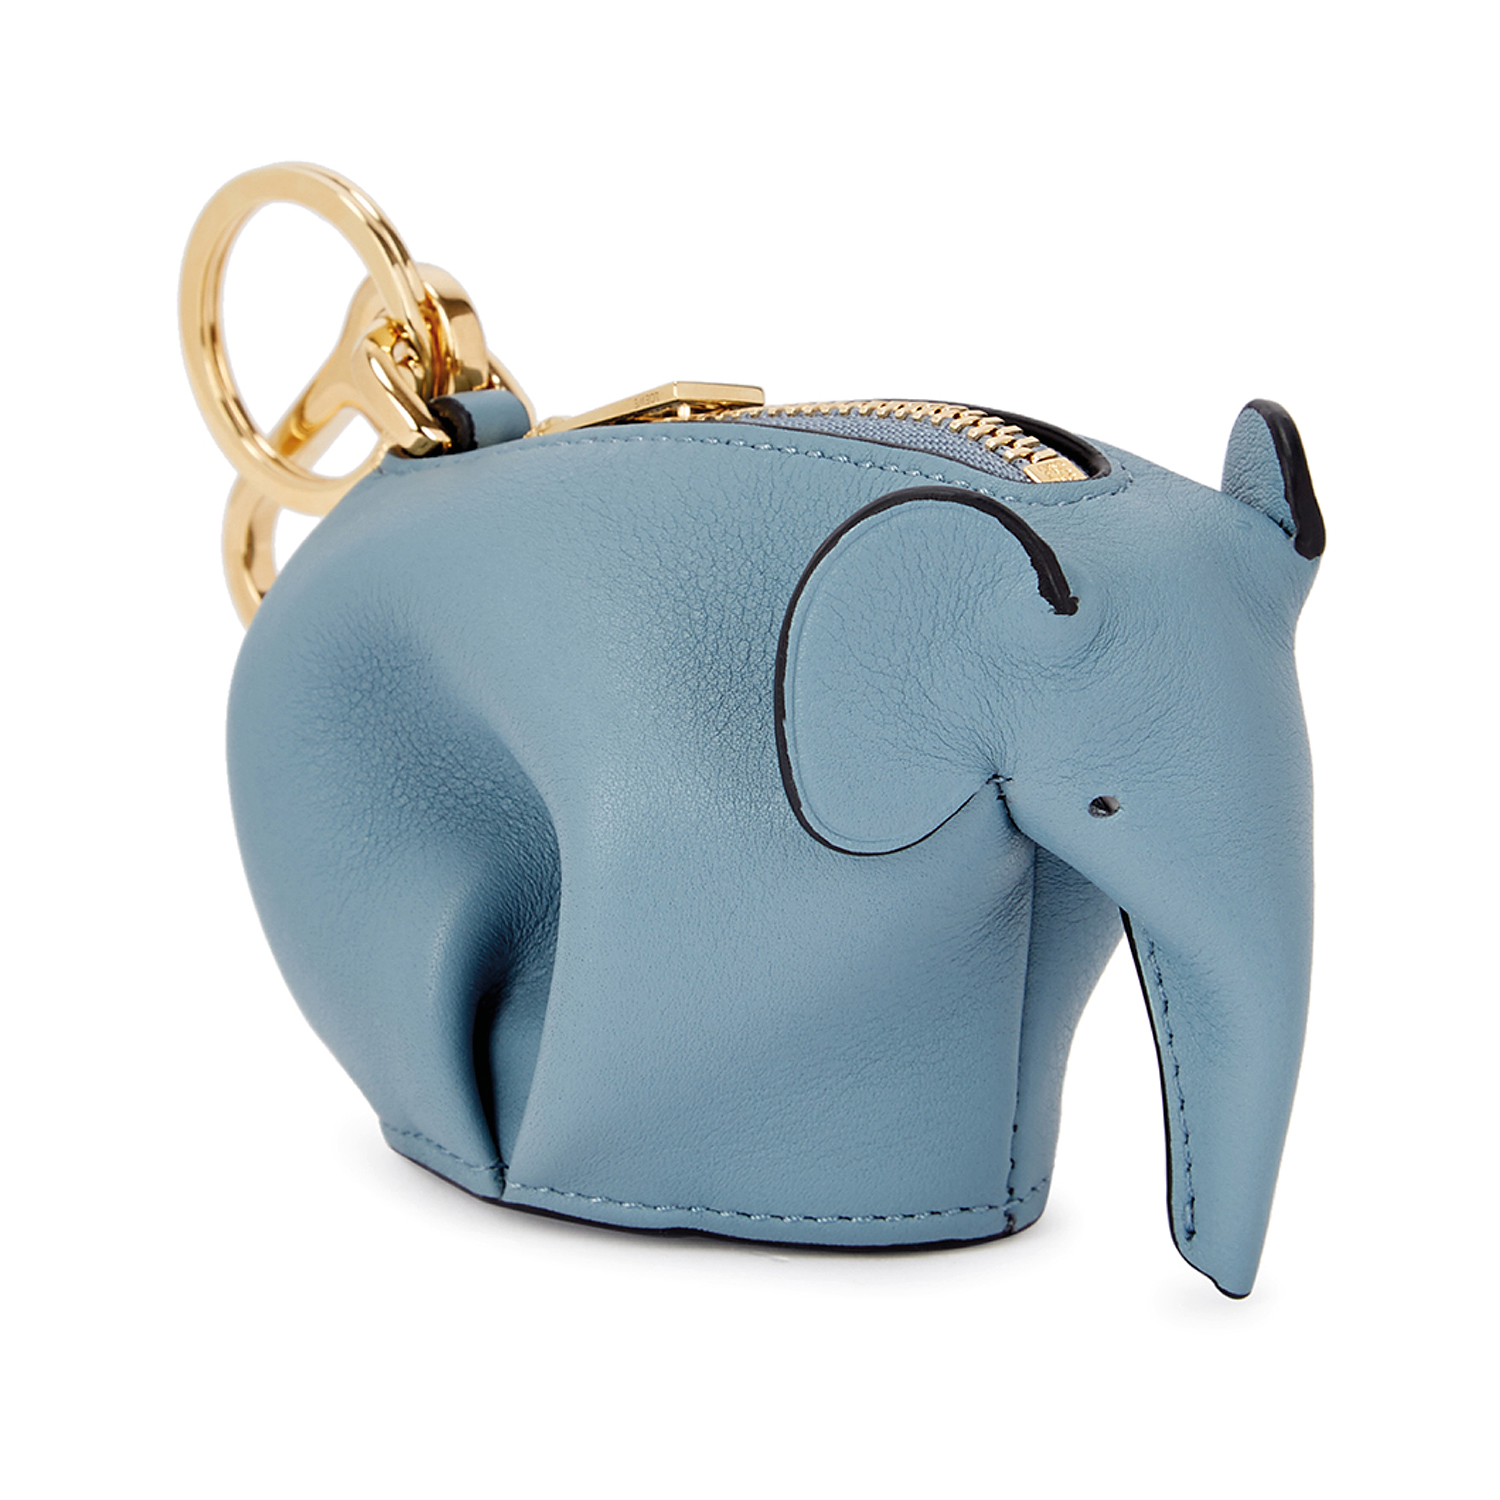 Multrees Walk Feature Image_1500x1500_Loewe Blue Elephant